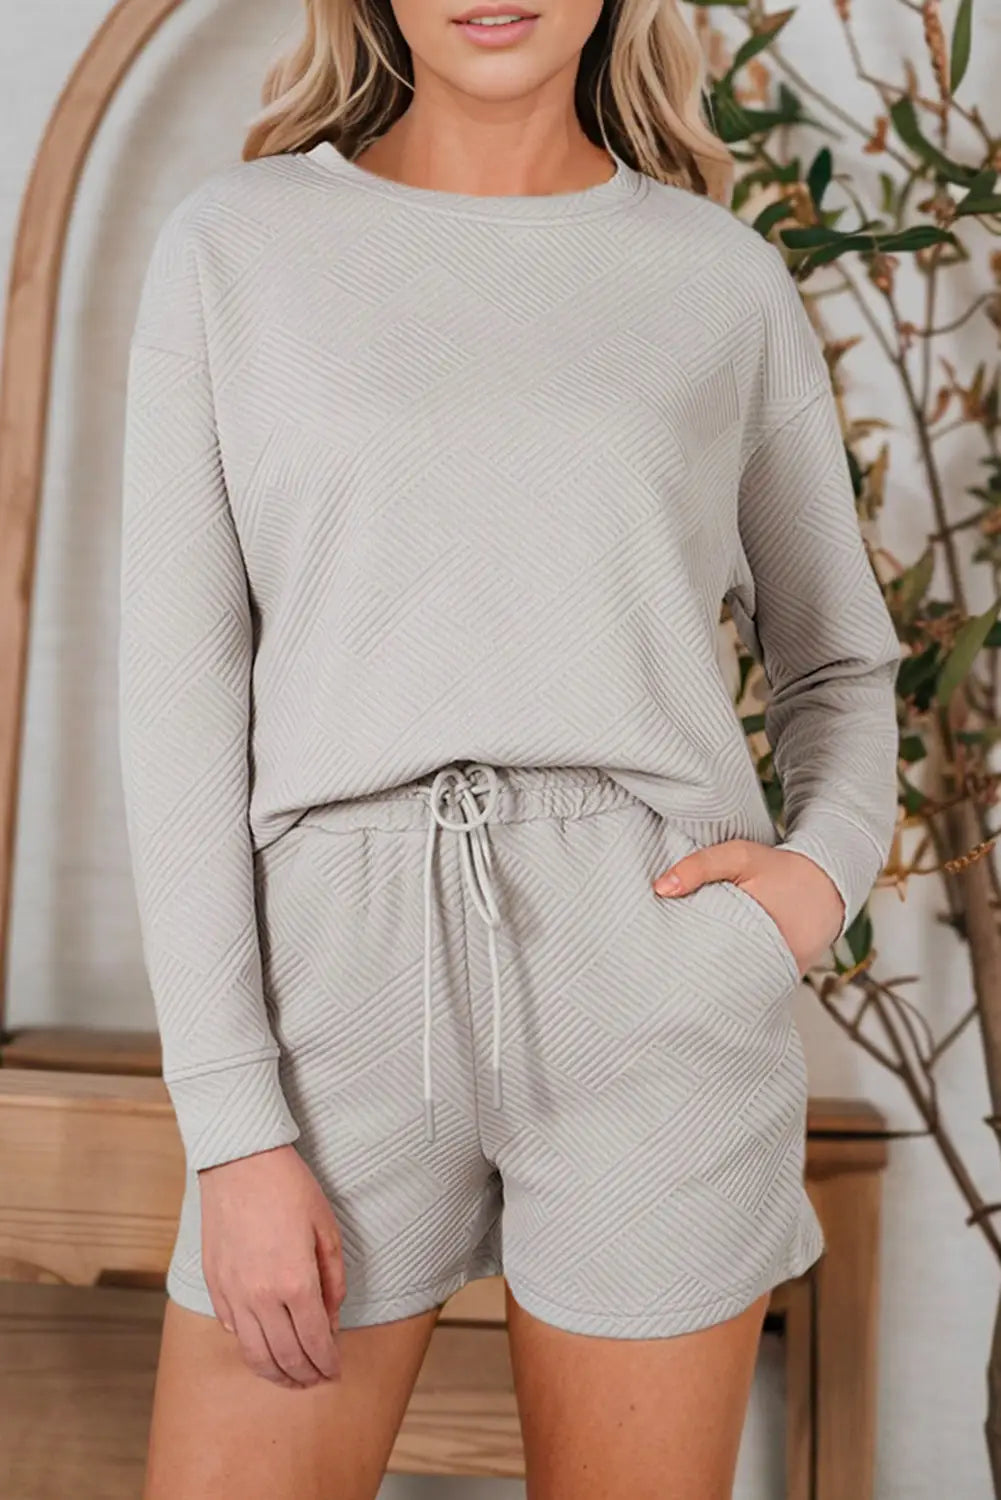 Gray textured long sleeve top and drawstring shorts set - loungewear